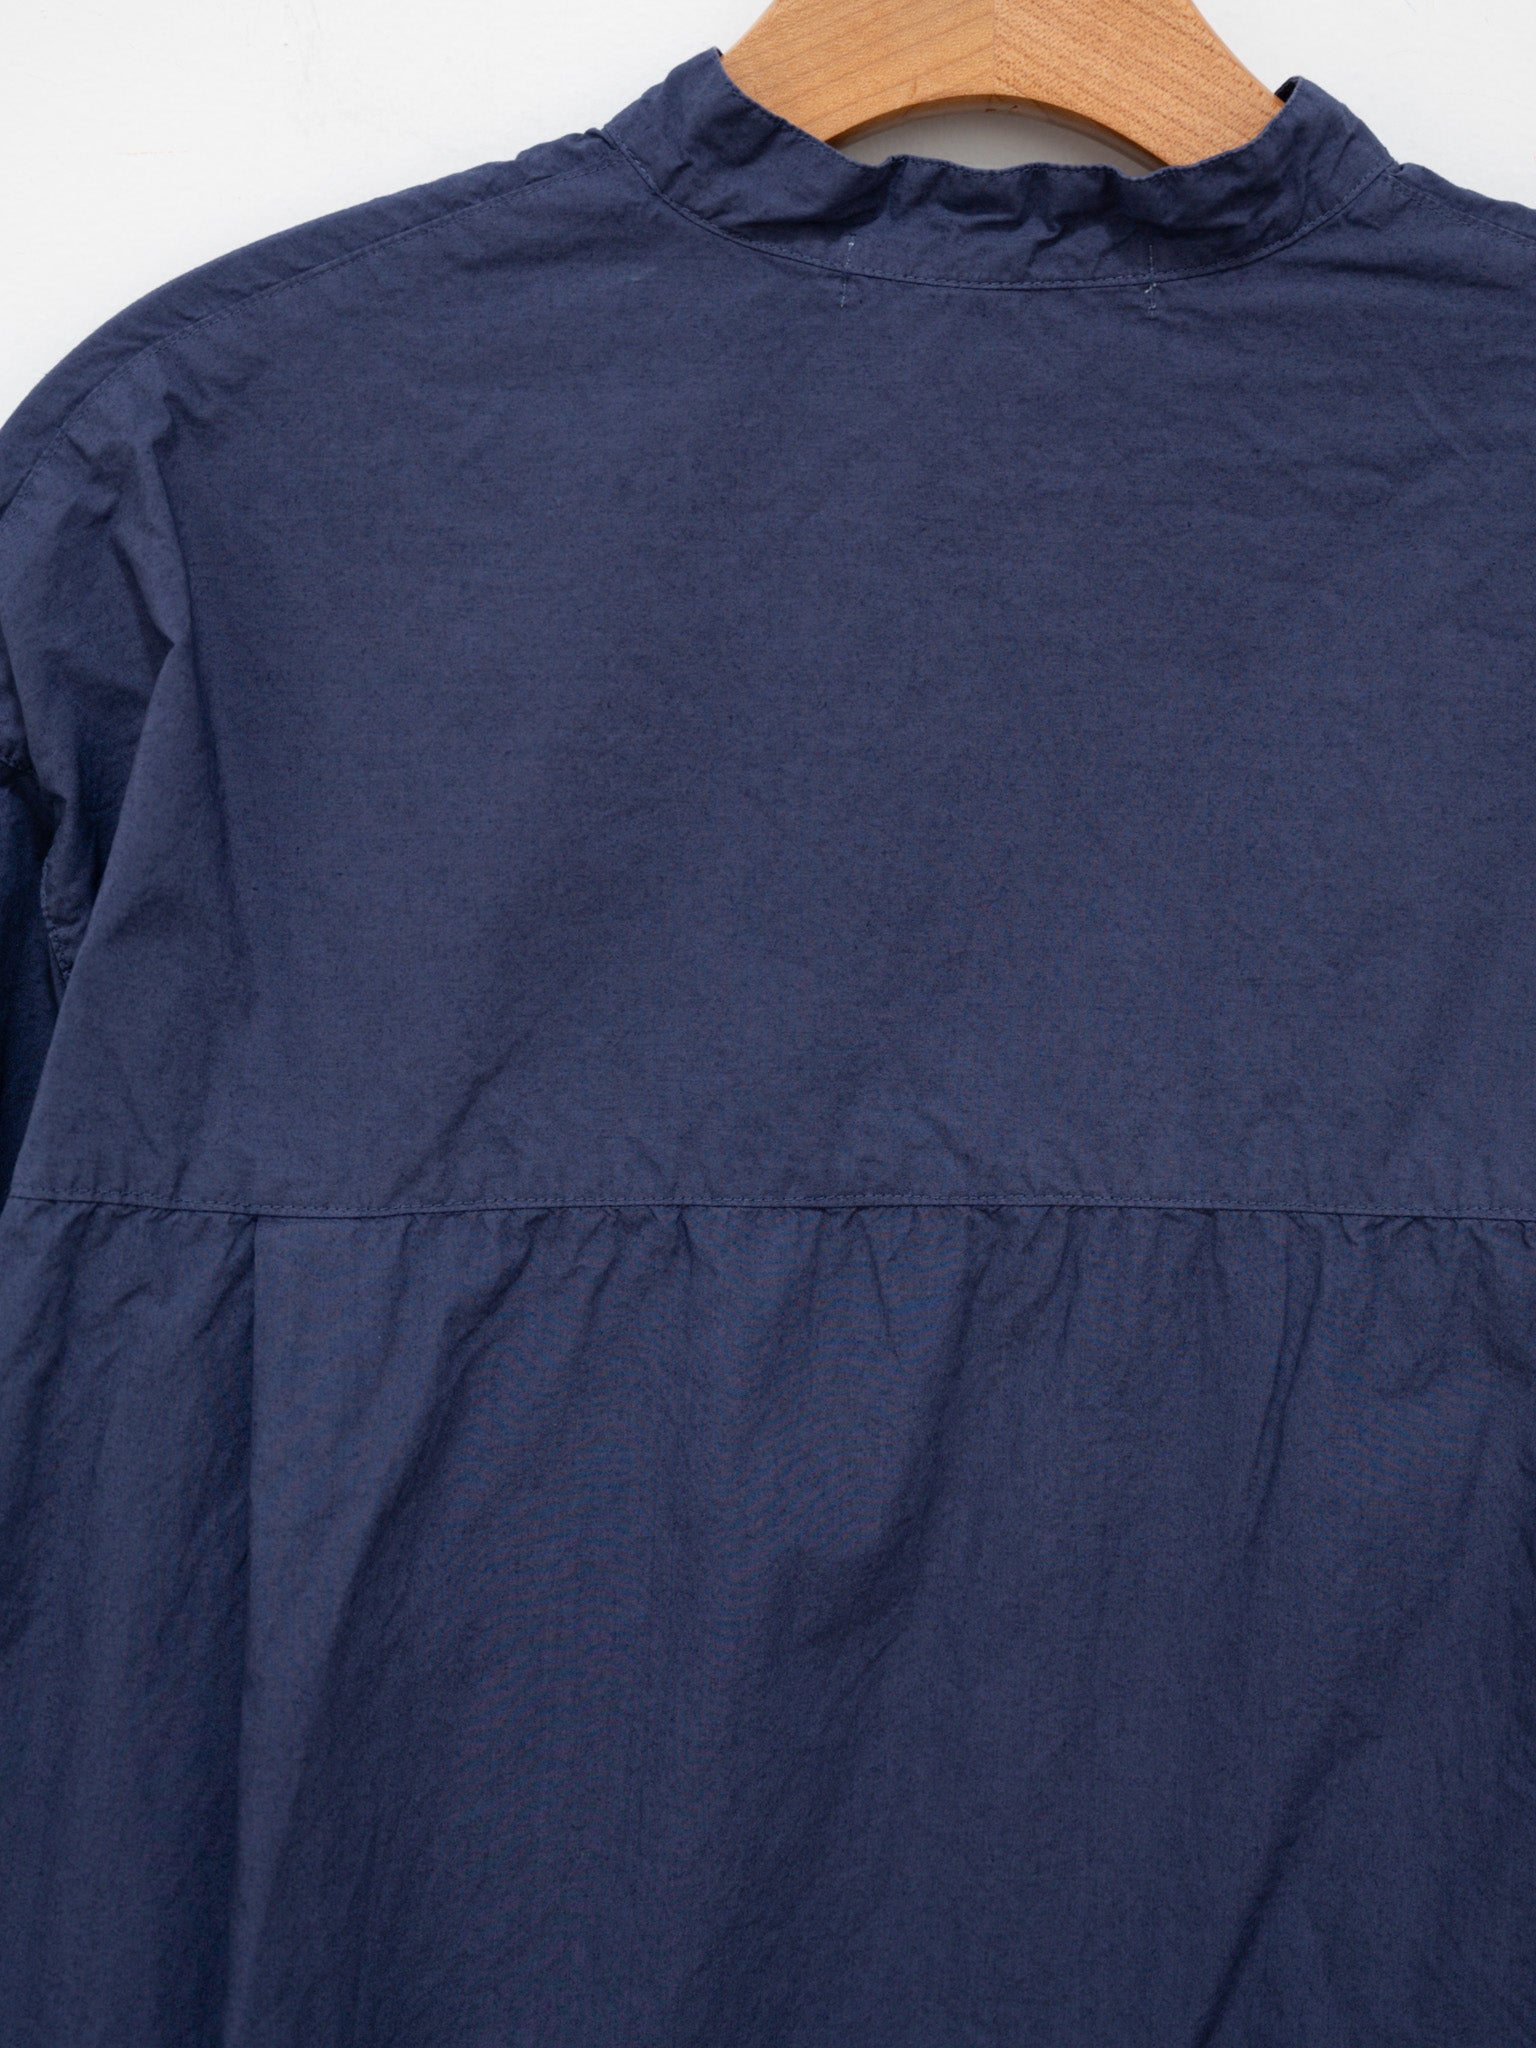 Namu Shop - Veritecoeur Stand Collar Shirt - Navy